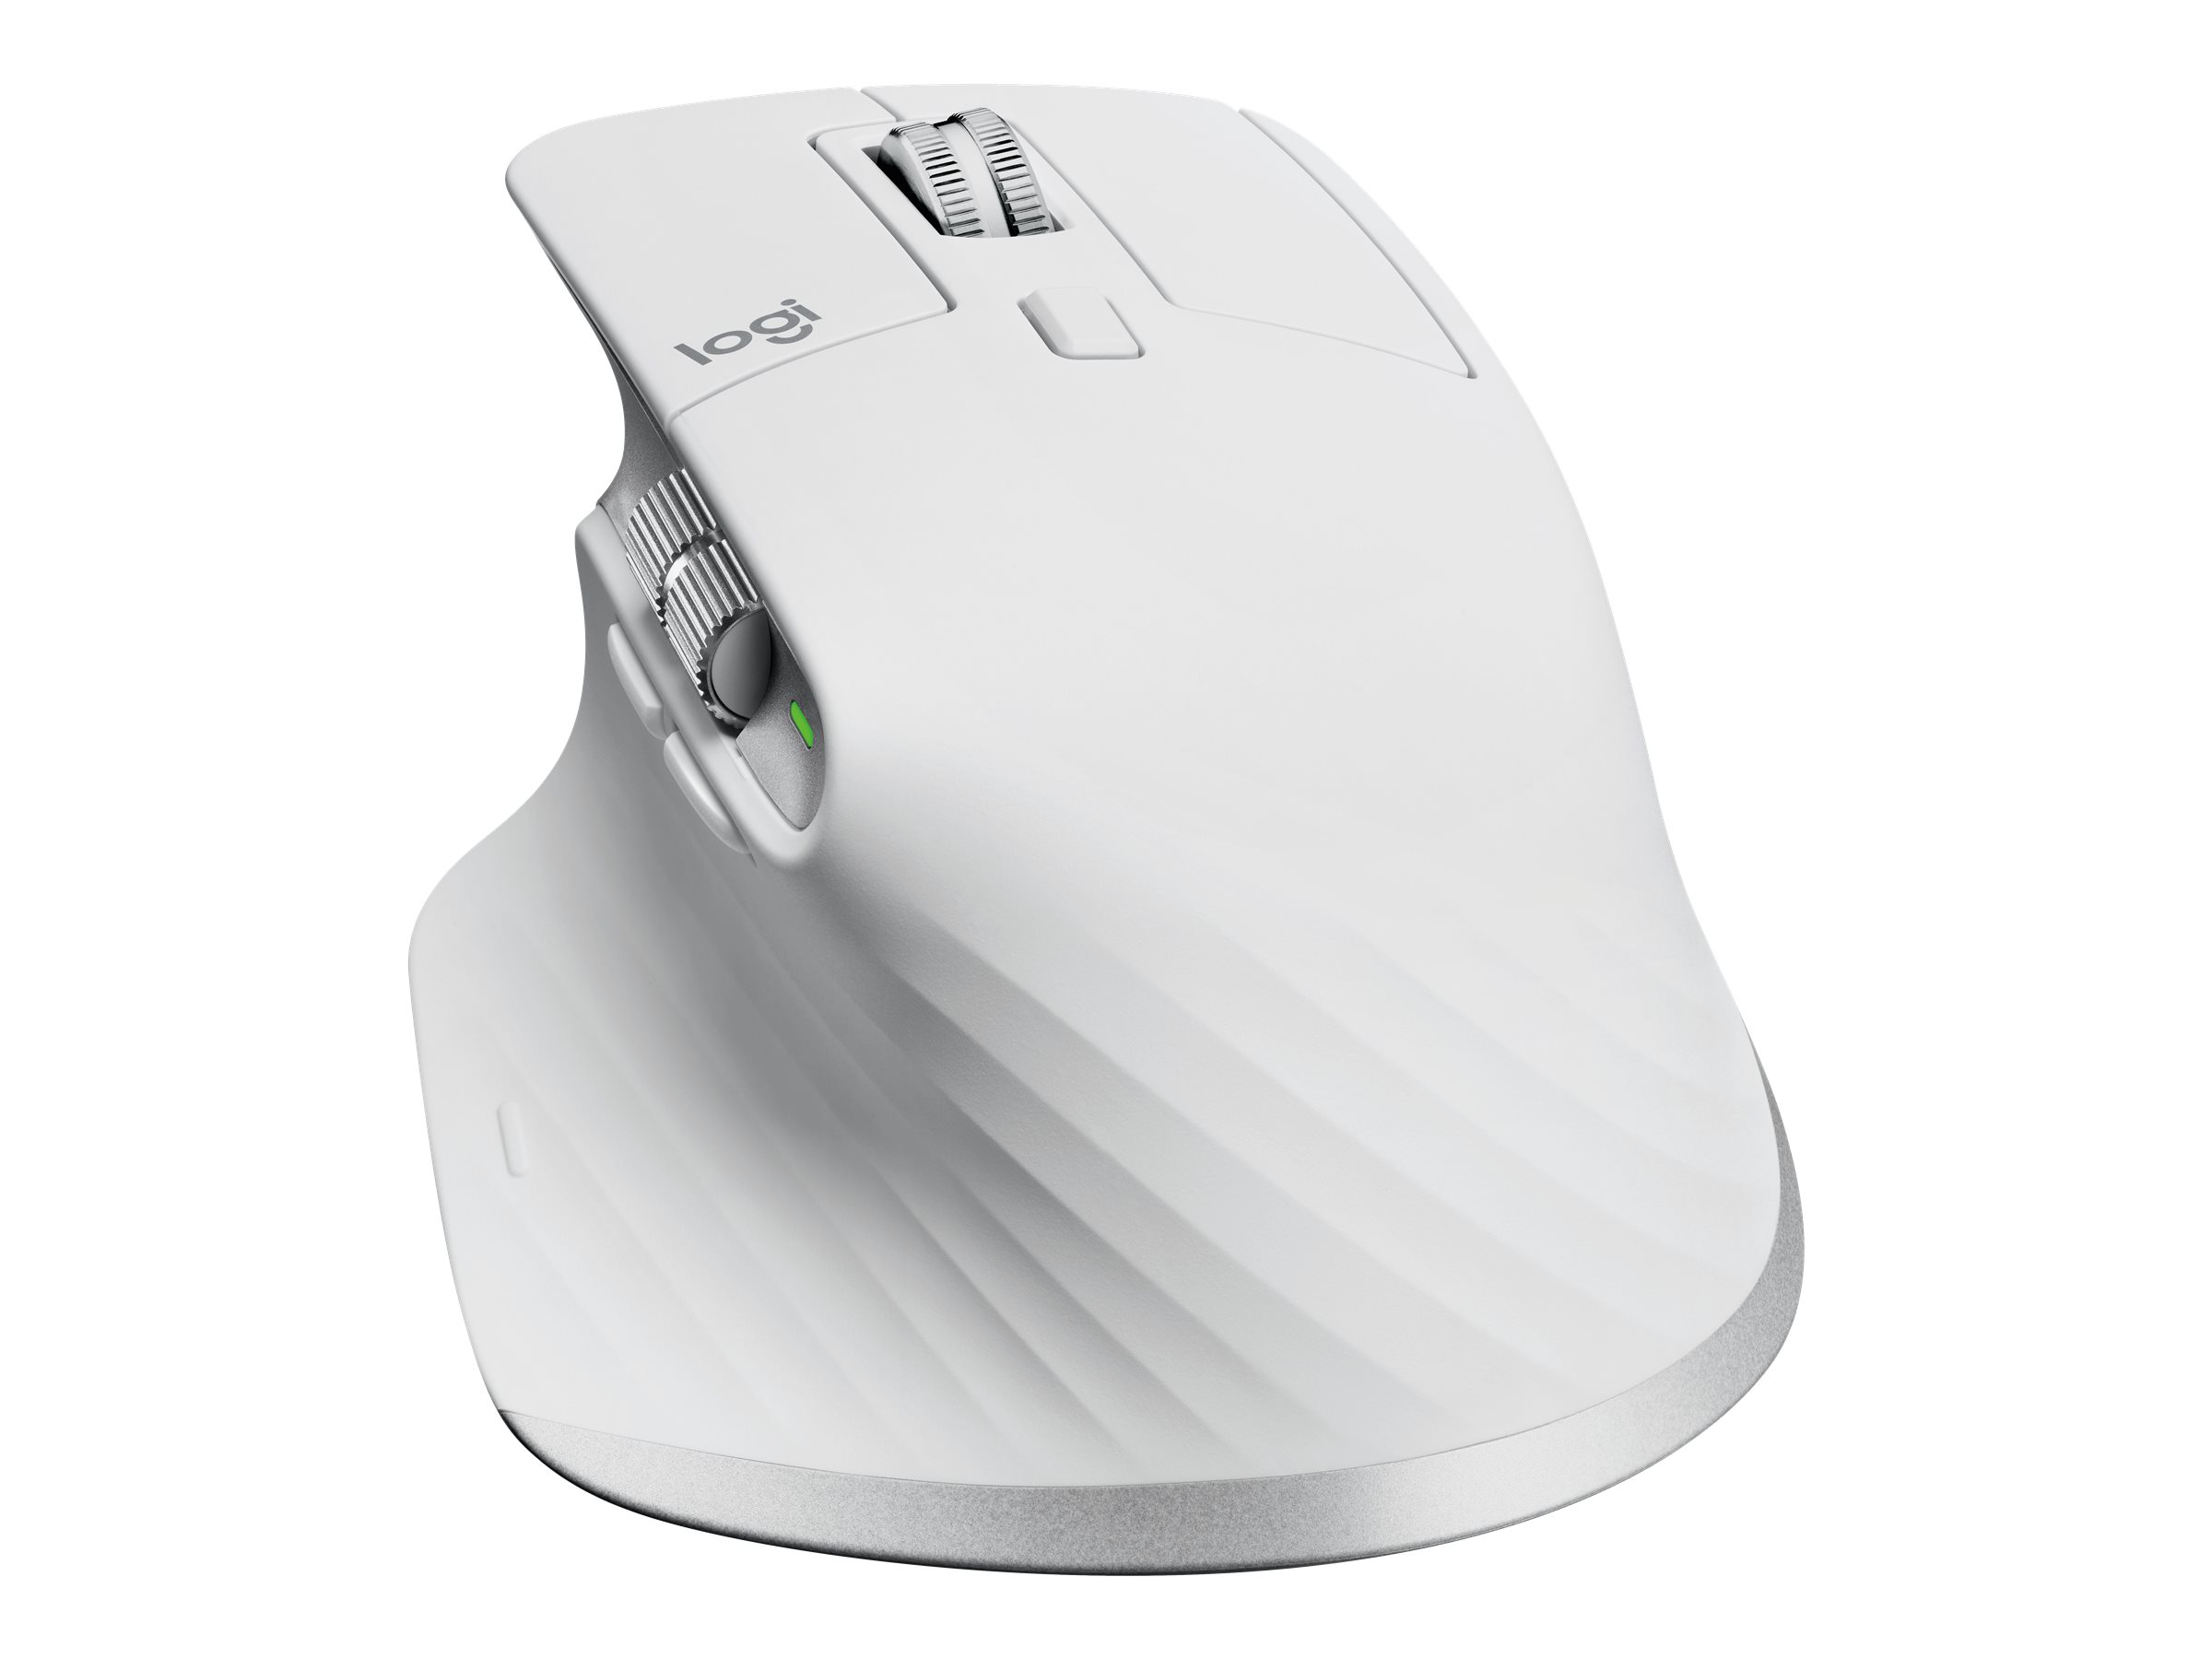 Logitech MX MASTER 3S Performance Wireless Mouse Pale Gray